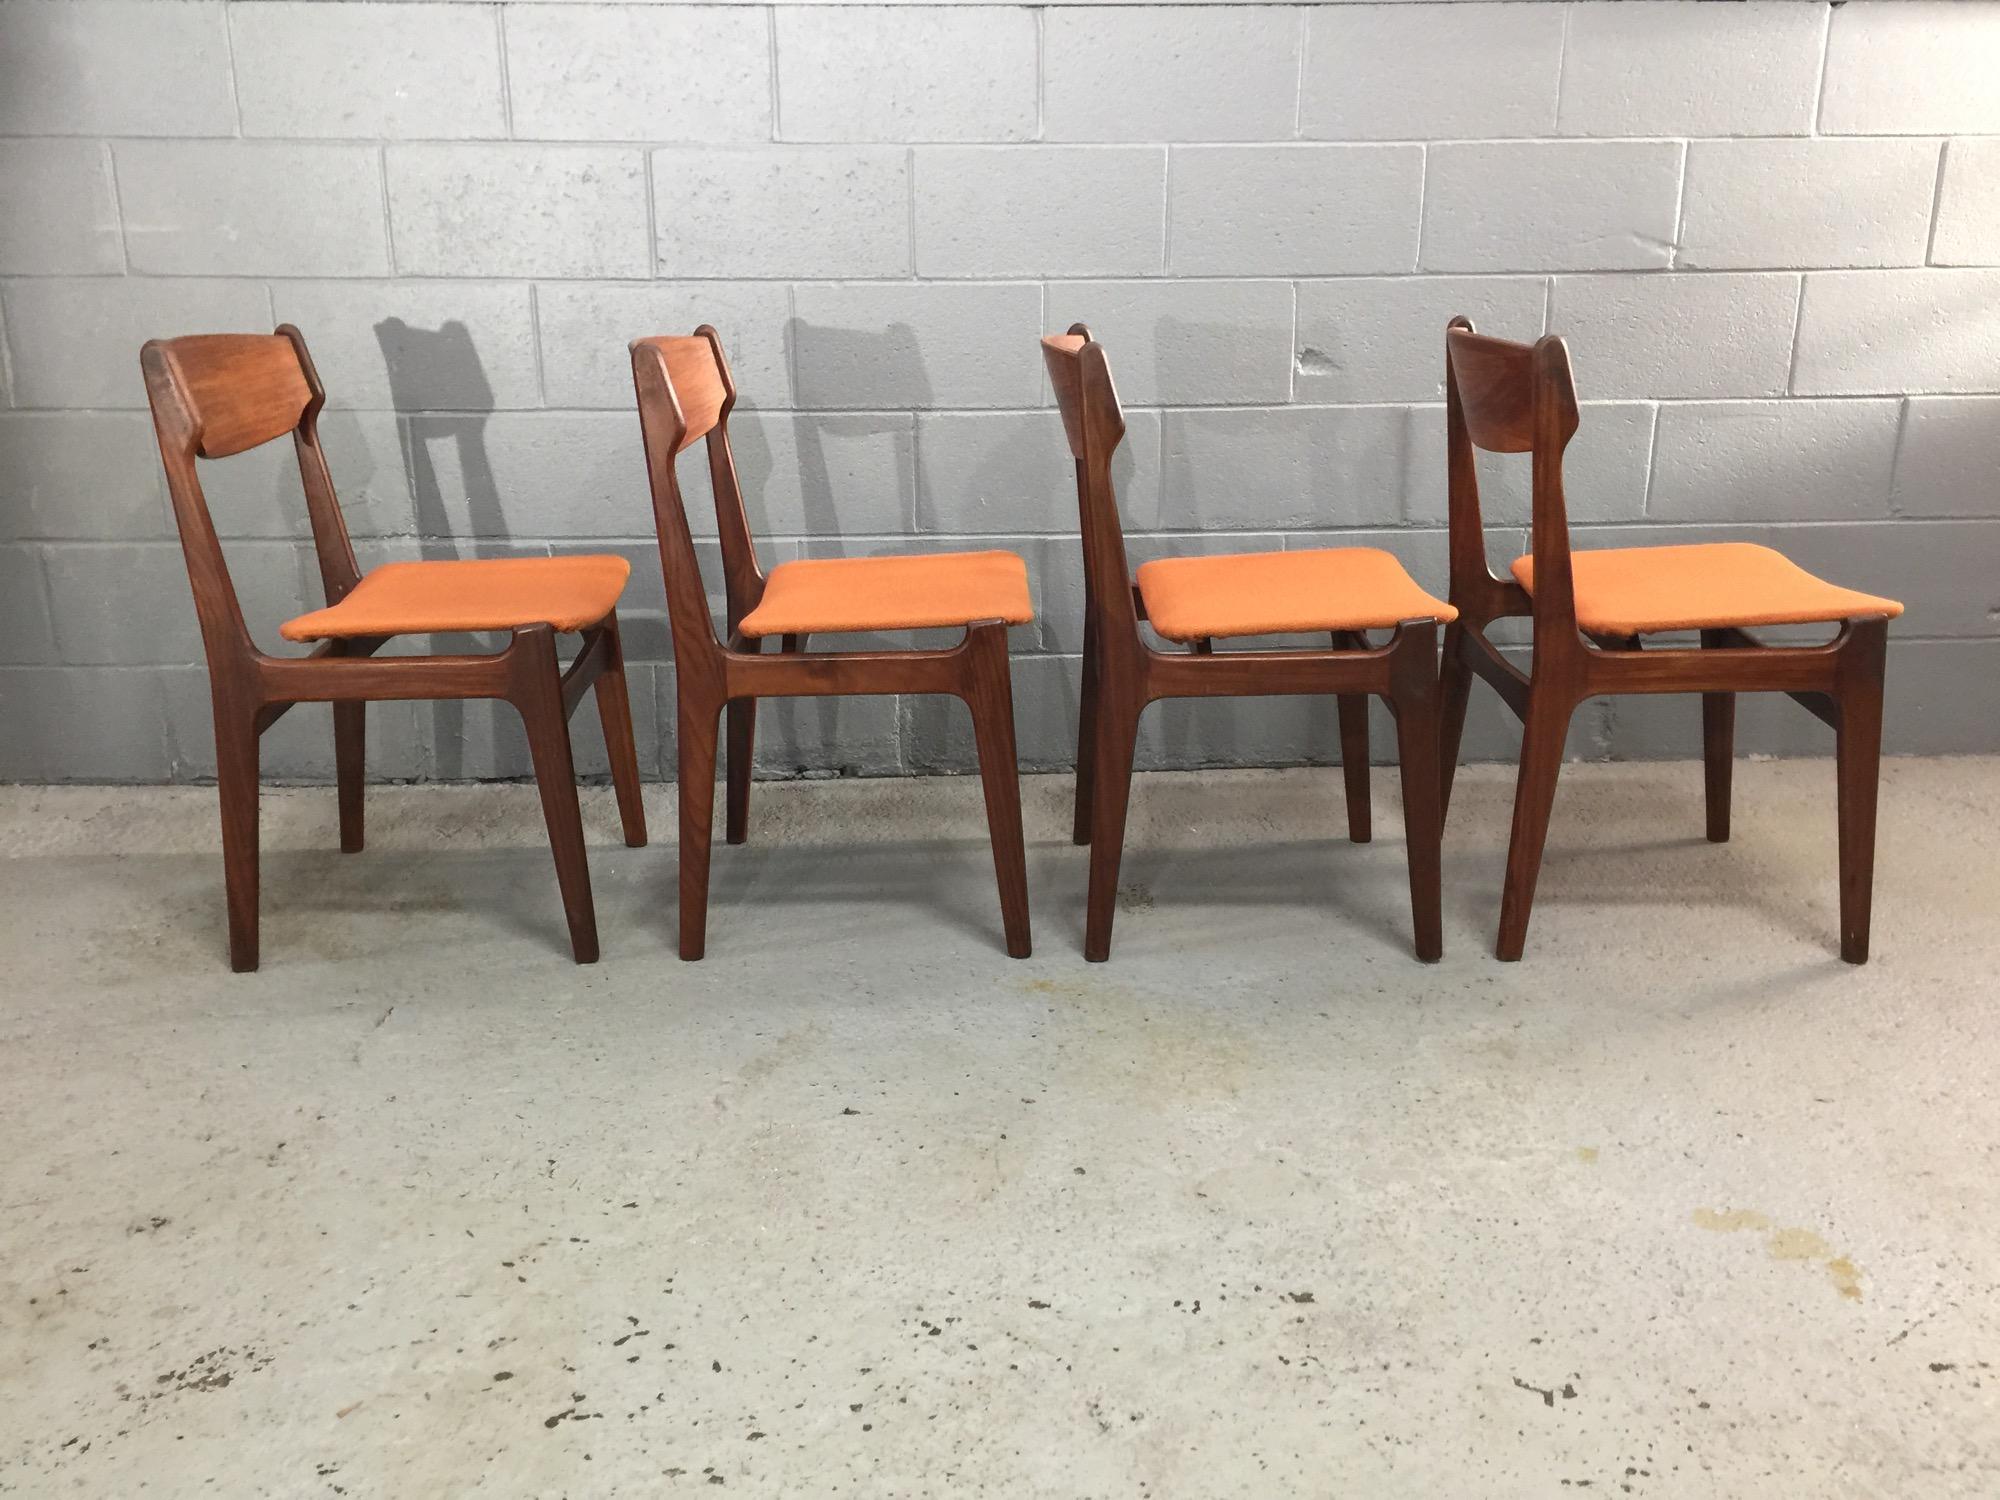 20th Century Set of Six Teak and Orange Fabric Dining Chairs